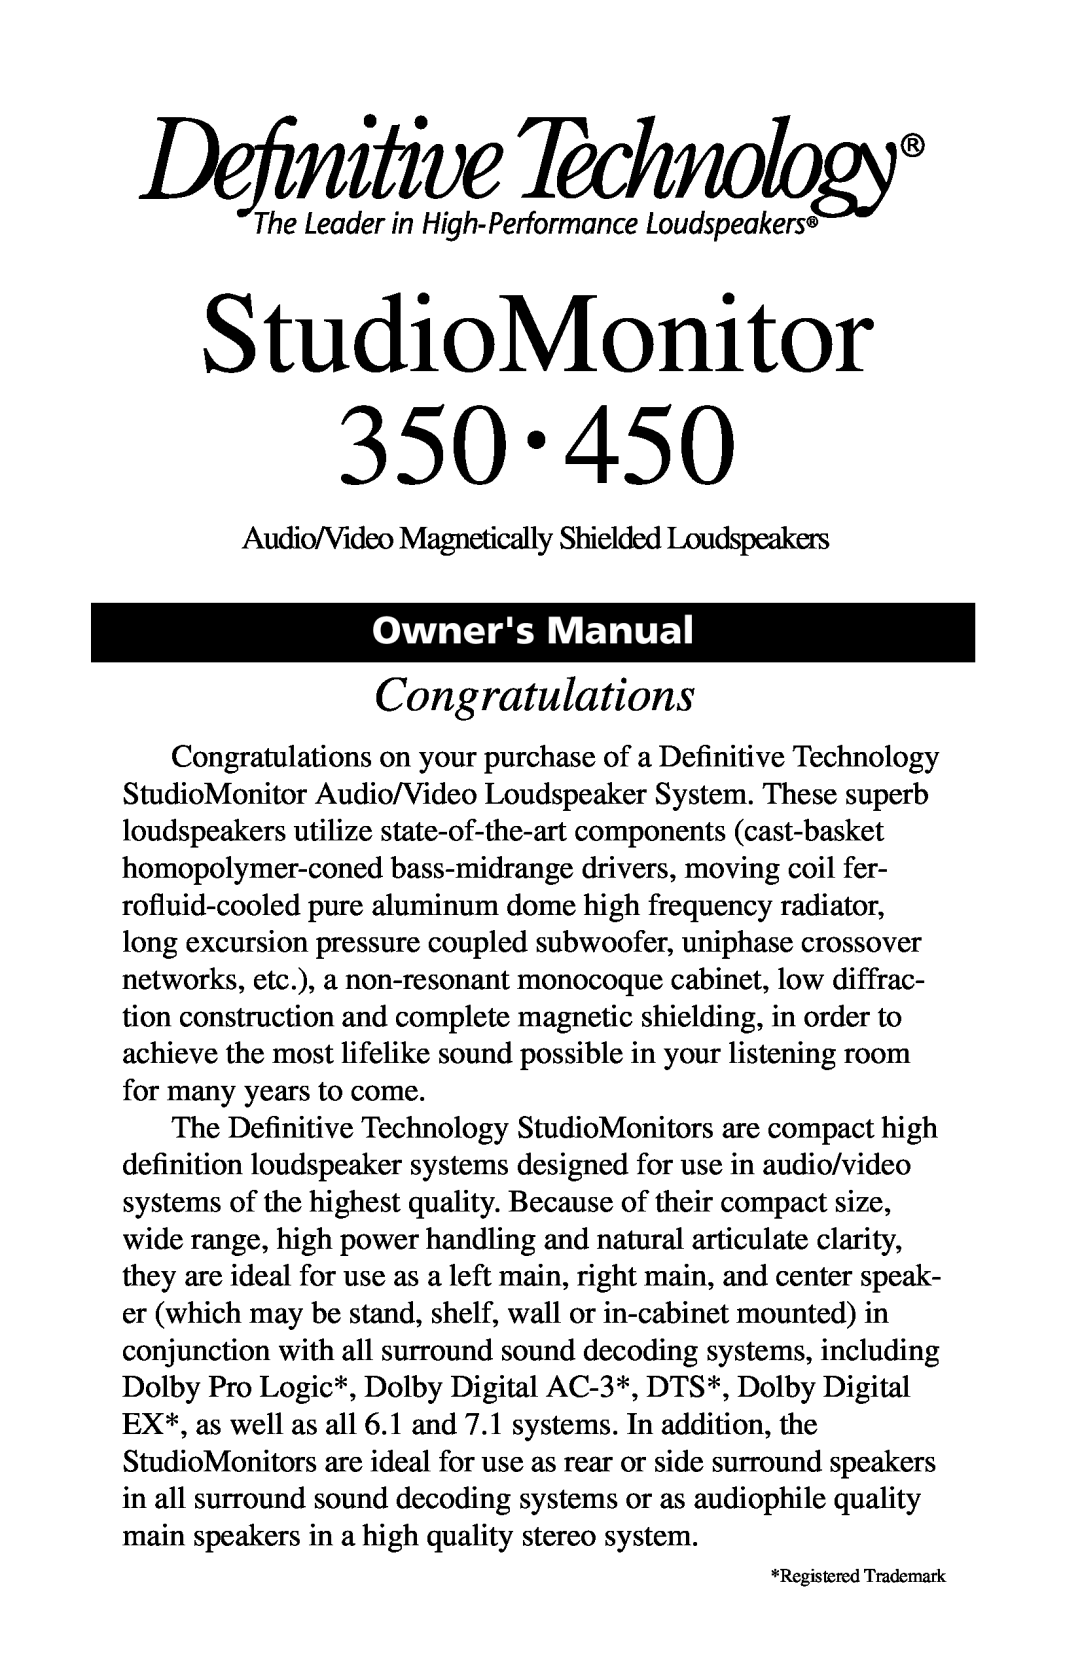 Definitive Technology 350, Studio Monitor, 450 owner manual StudioMonitor, Congratulations 